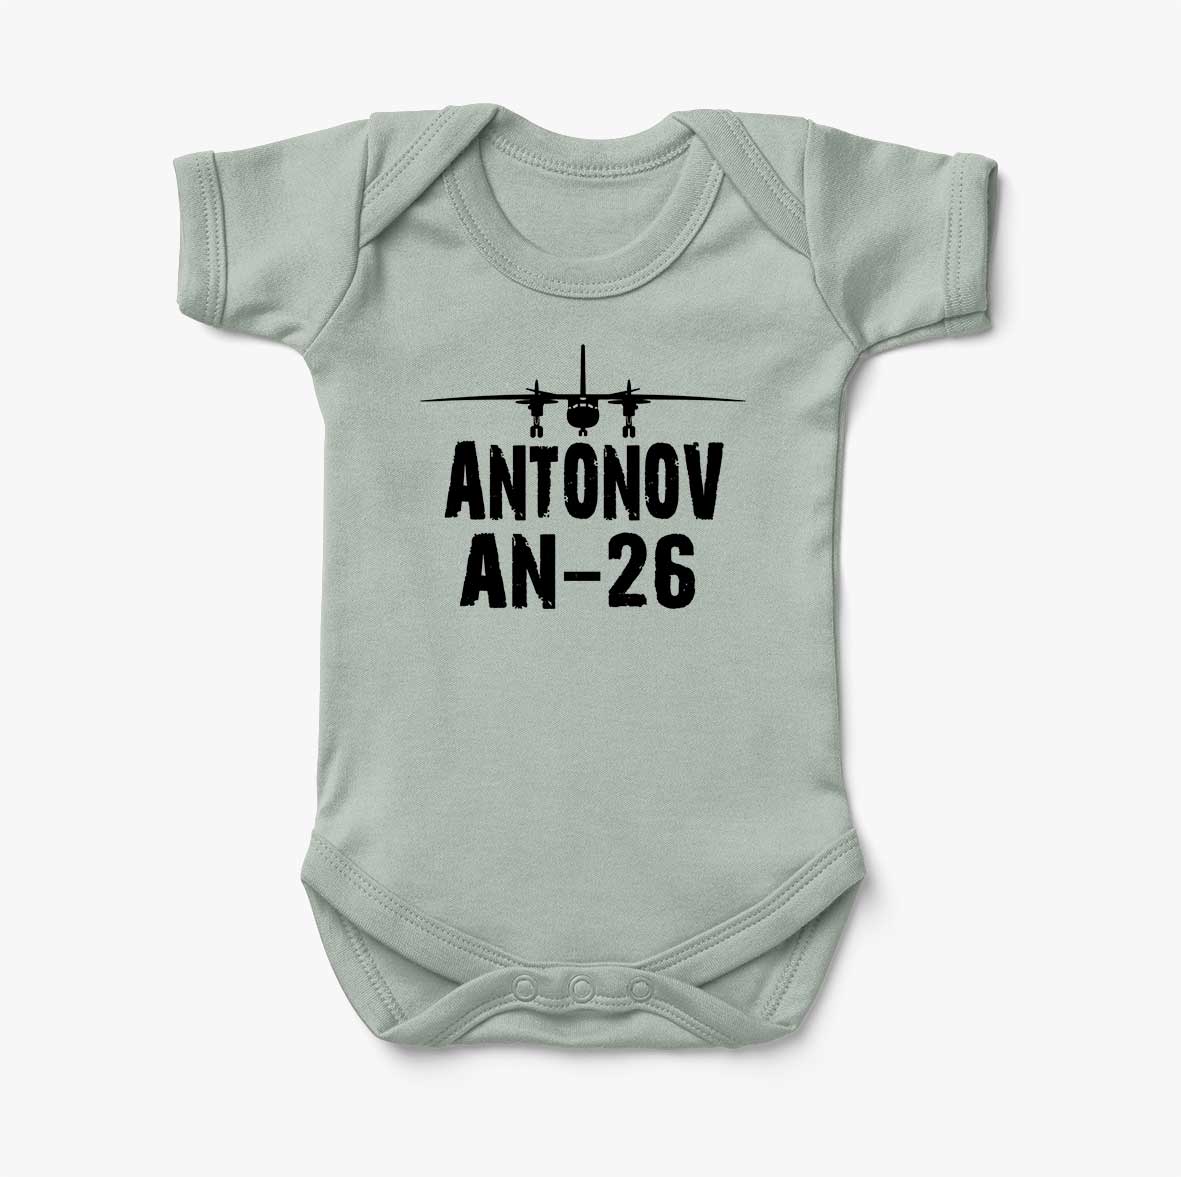 Antonov AN-26 & Plane Designed Baby Bodysuits